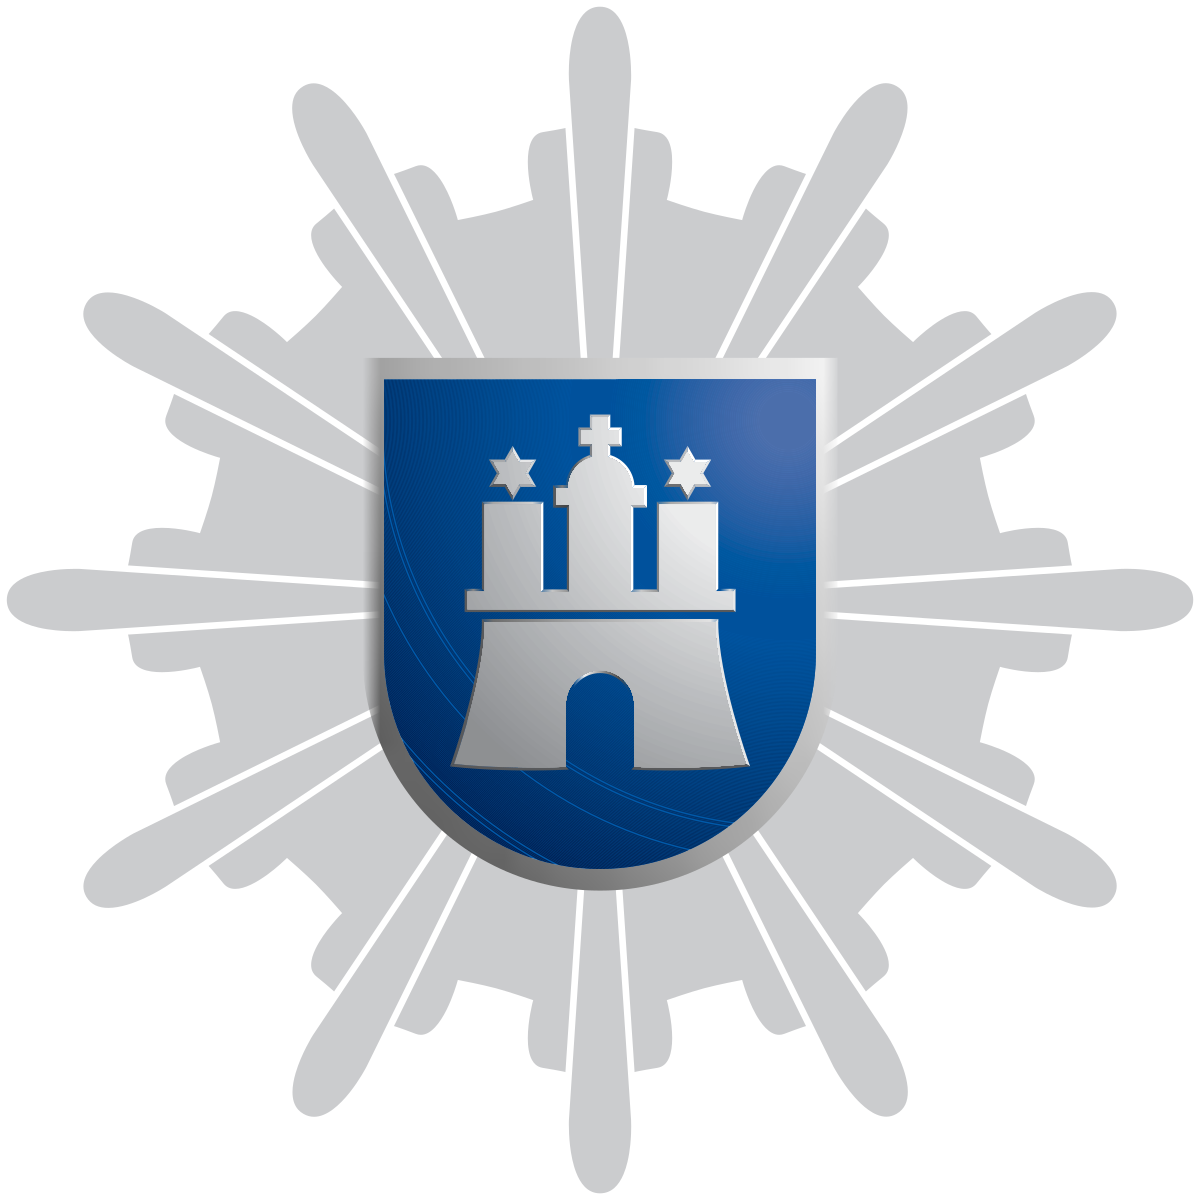 Polizei Hamburg Logo